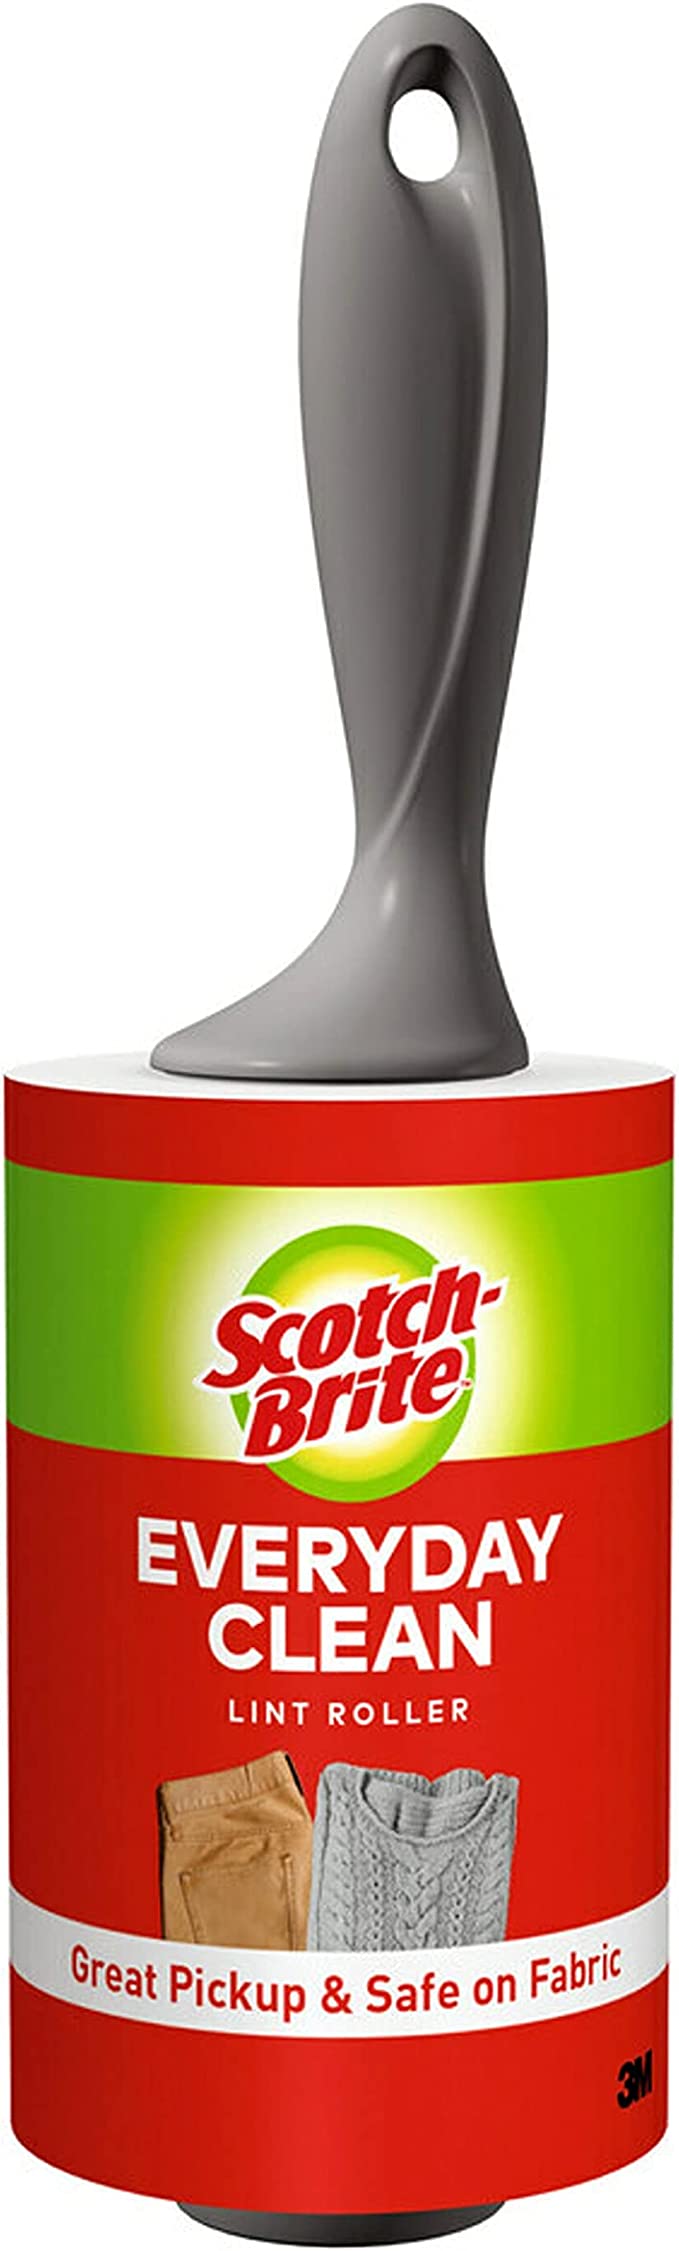 Scotch-Brite Lint Roller, 95-count, 5-pack